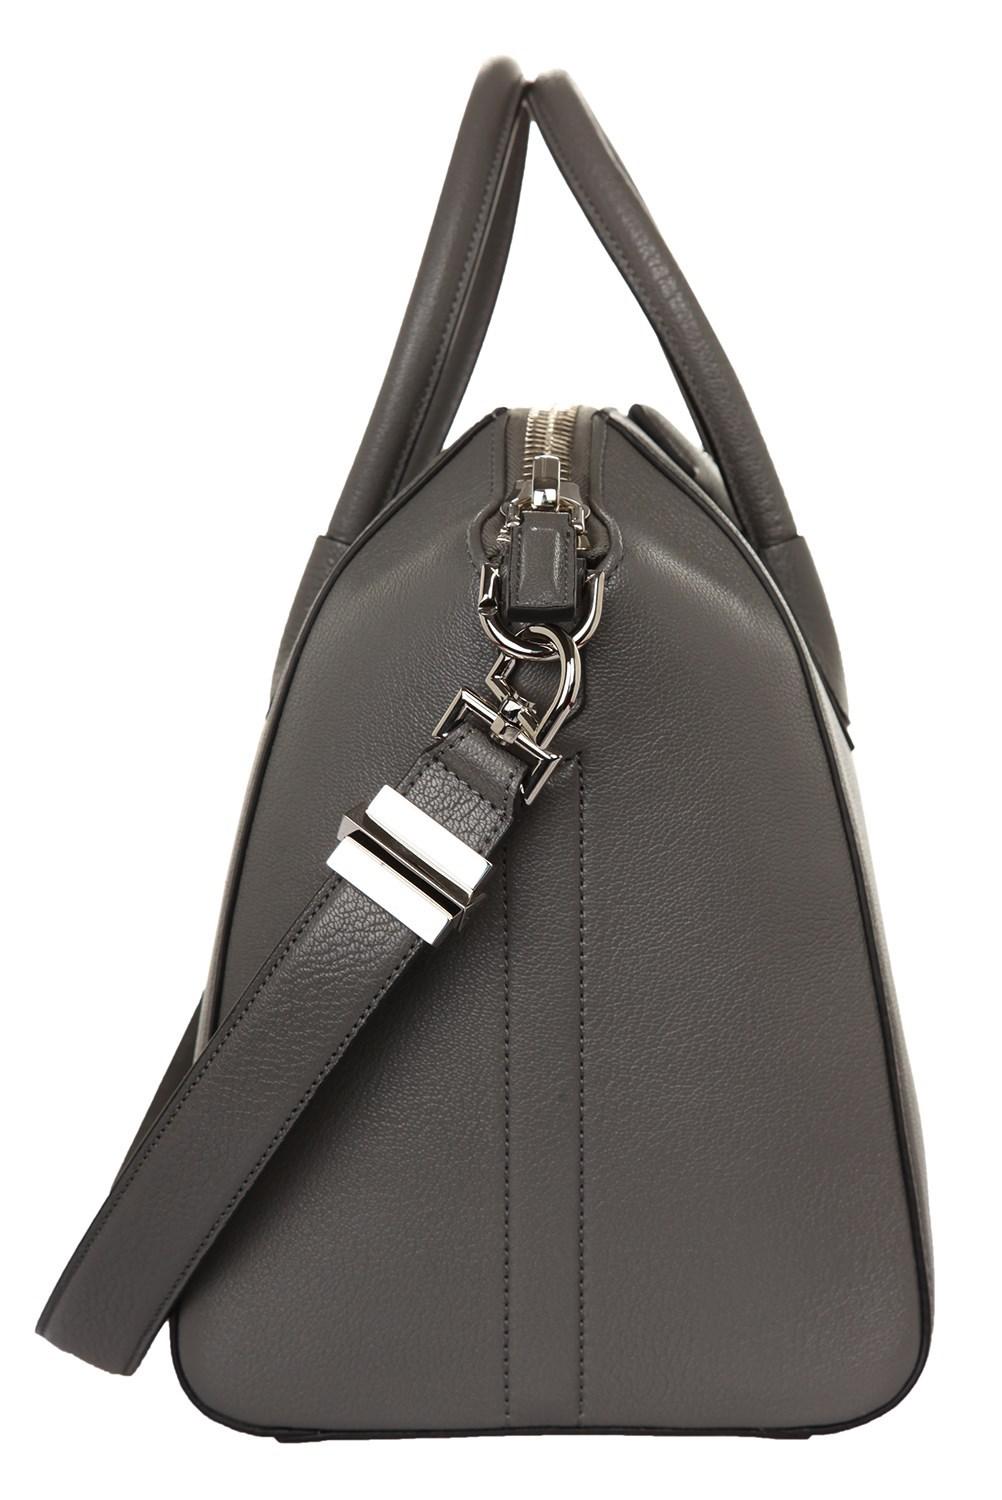 Givenchy Medium Antigona Bag In Grey Grained Leather in Gray - Lyst